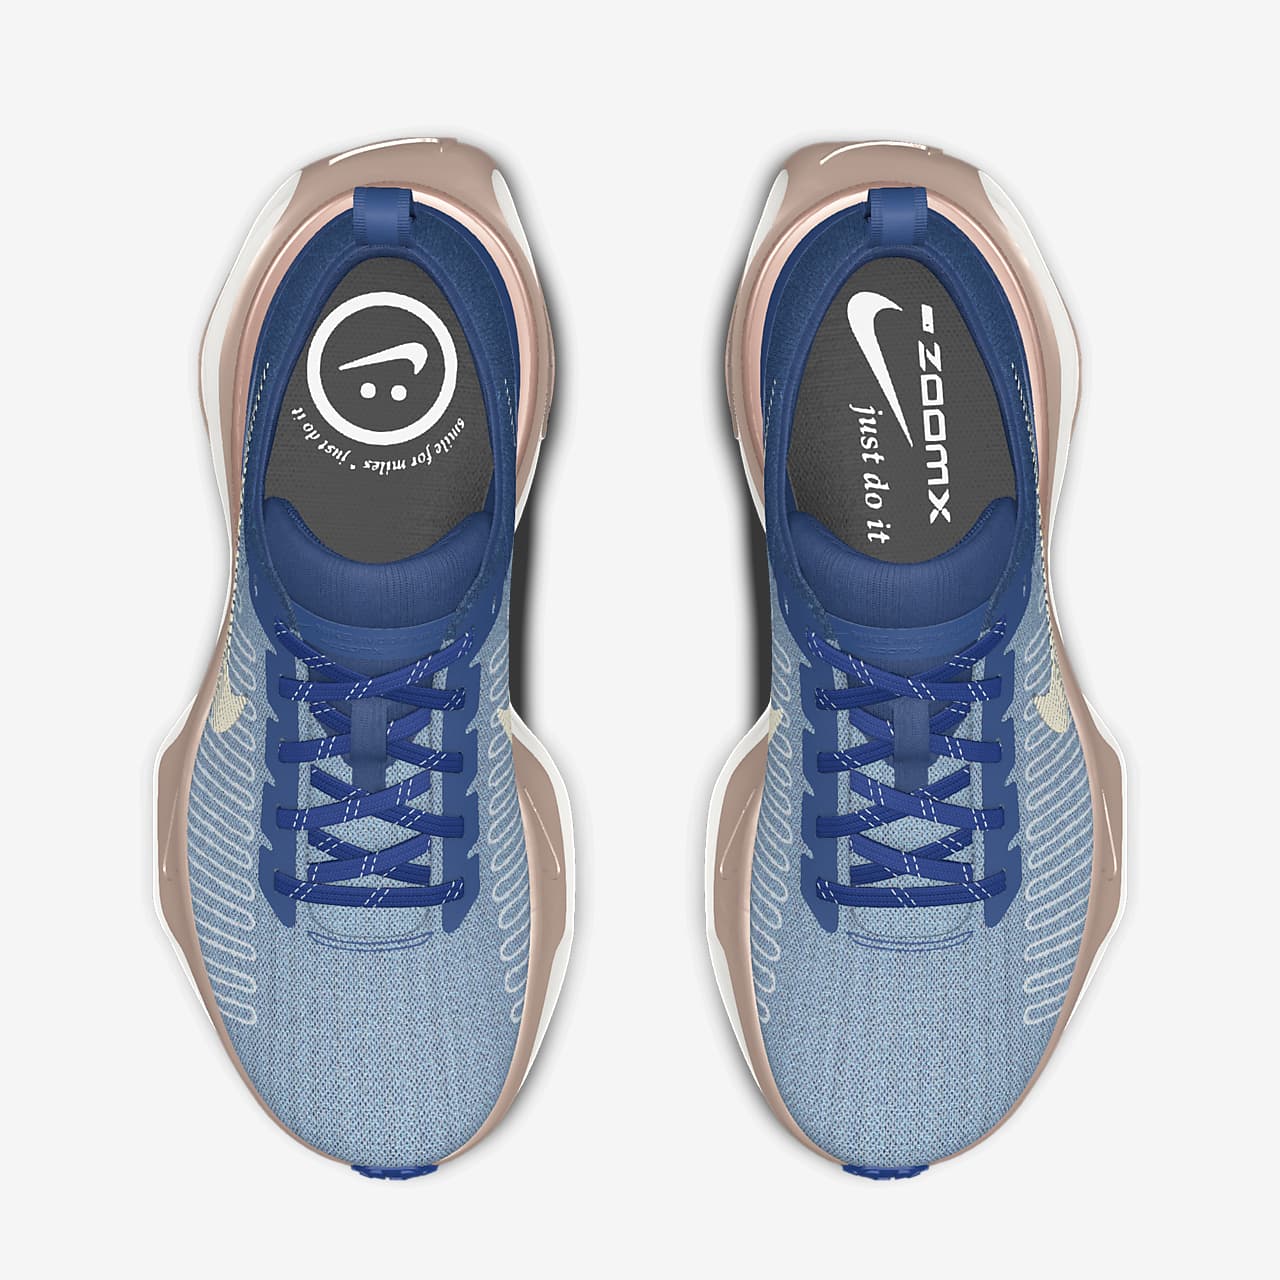 Nike Invincible 3 Women's Road Running Shoes.